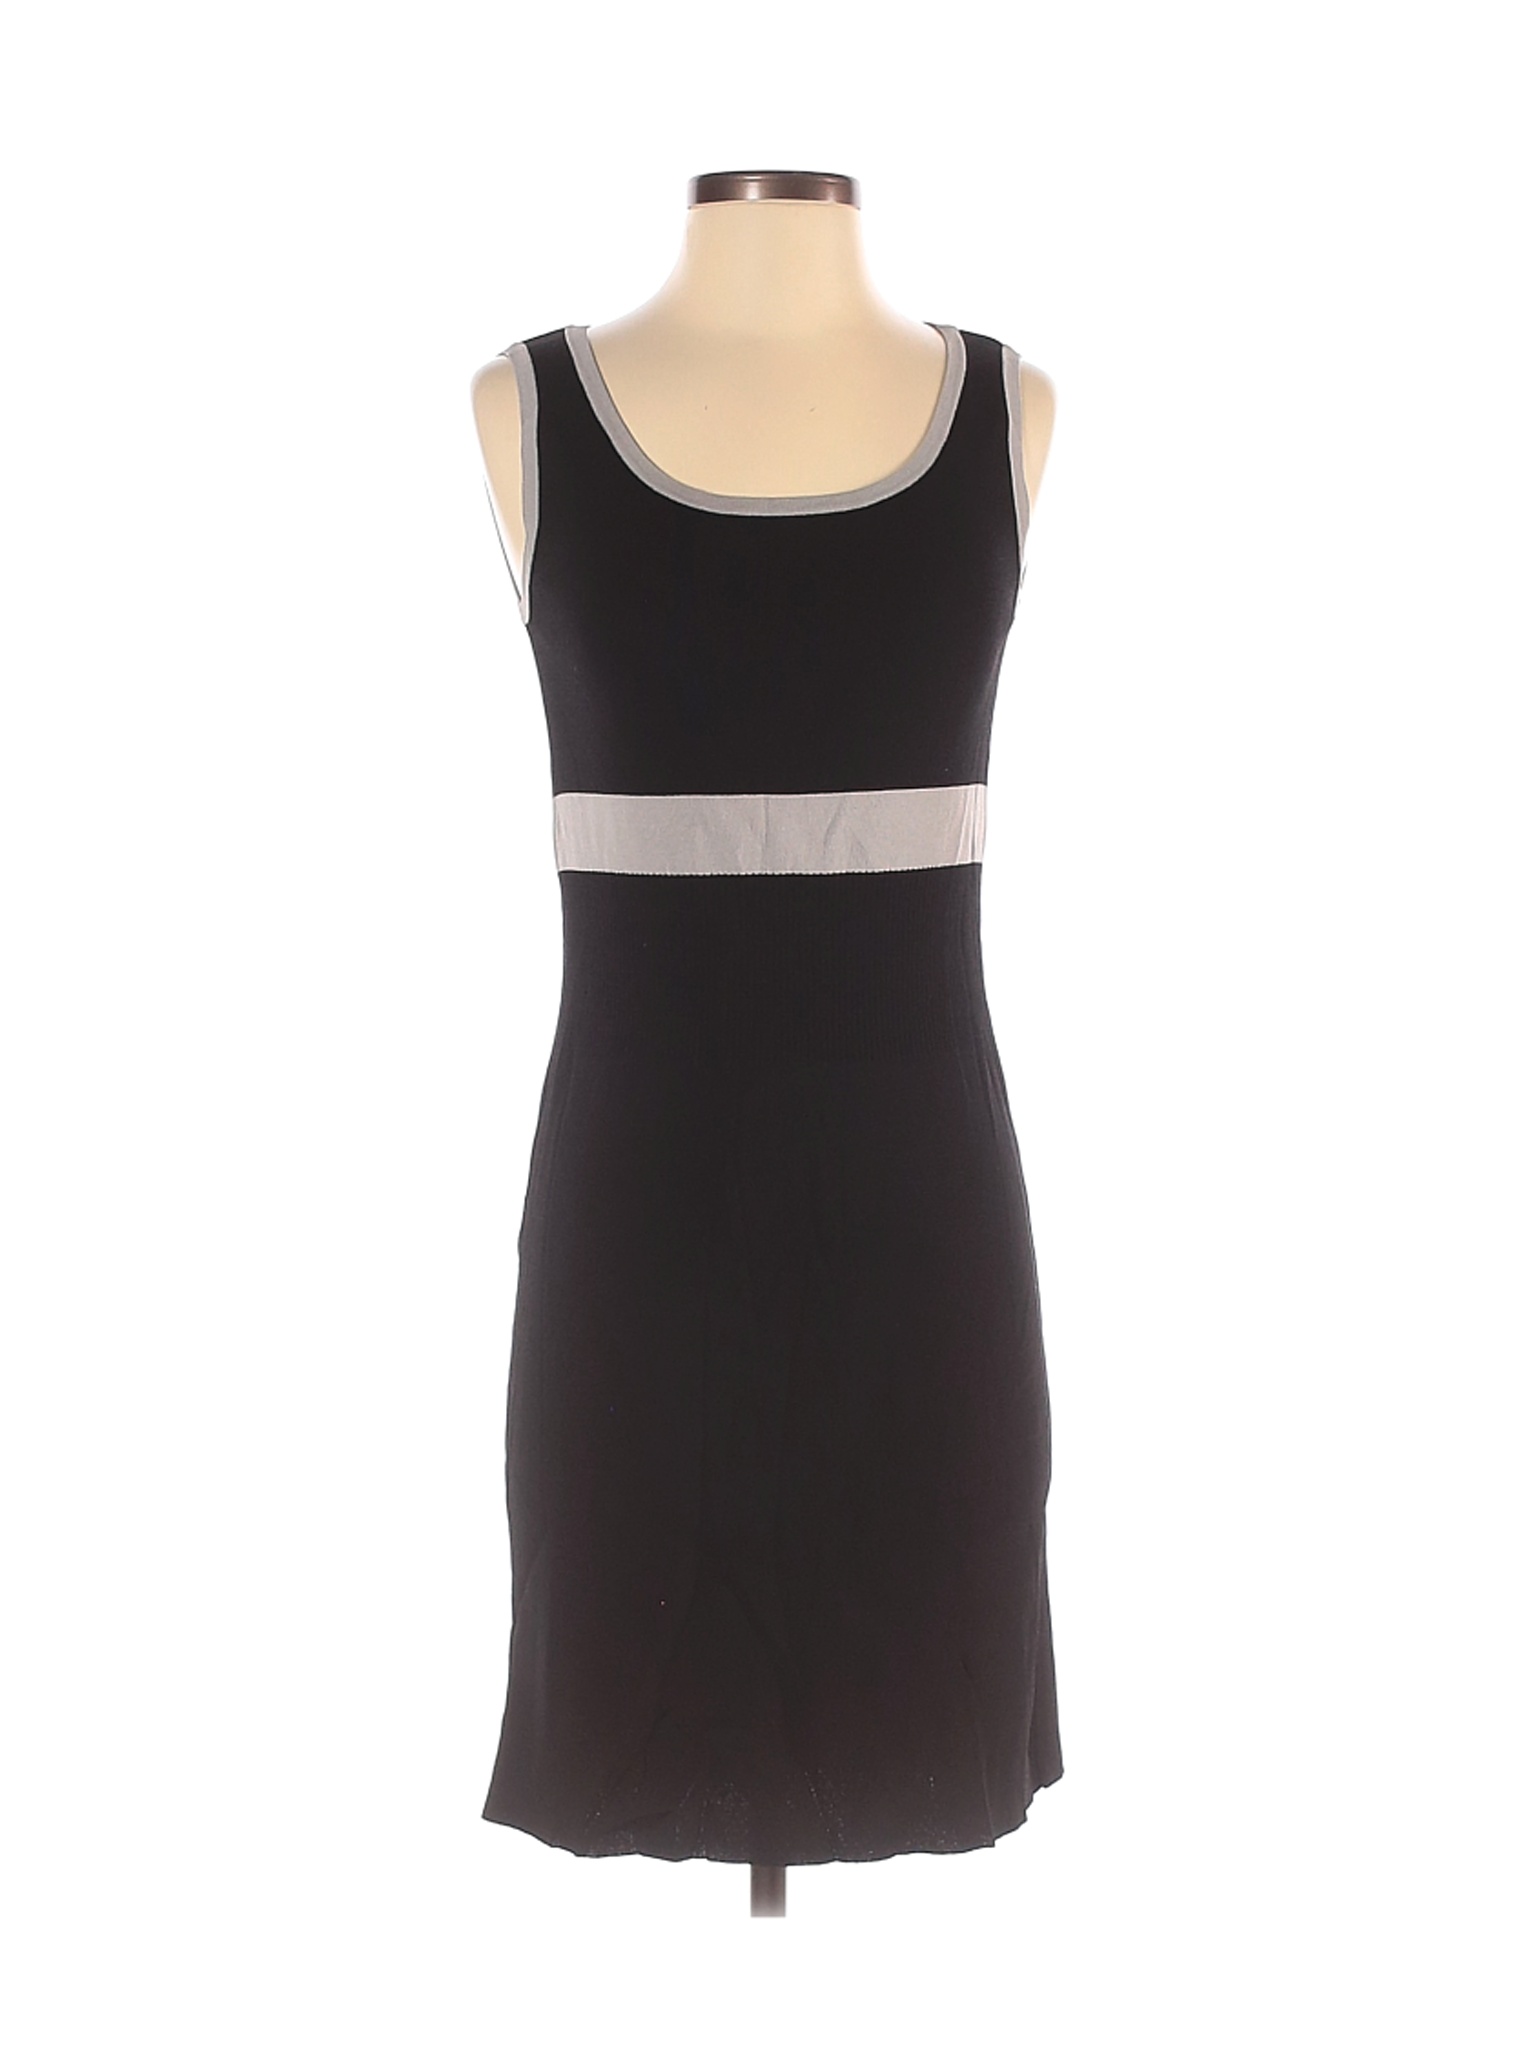 Adrienne Vittadini Women Black Casual Dress S | eBay